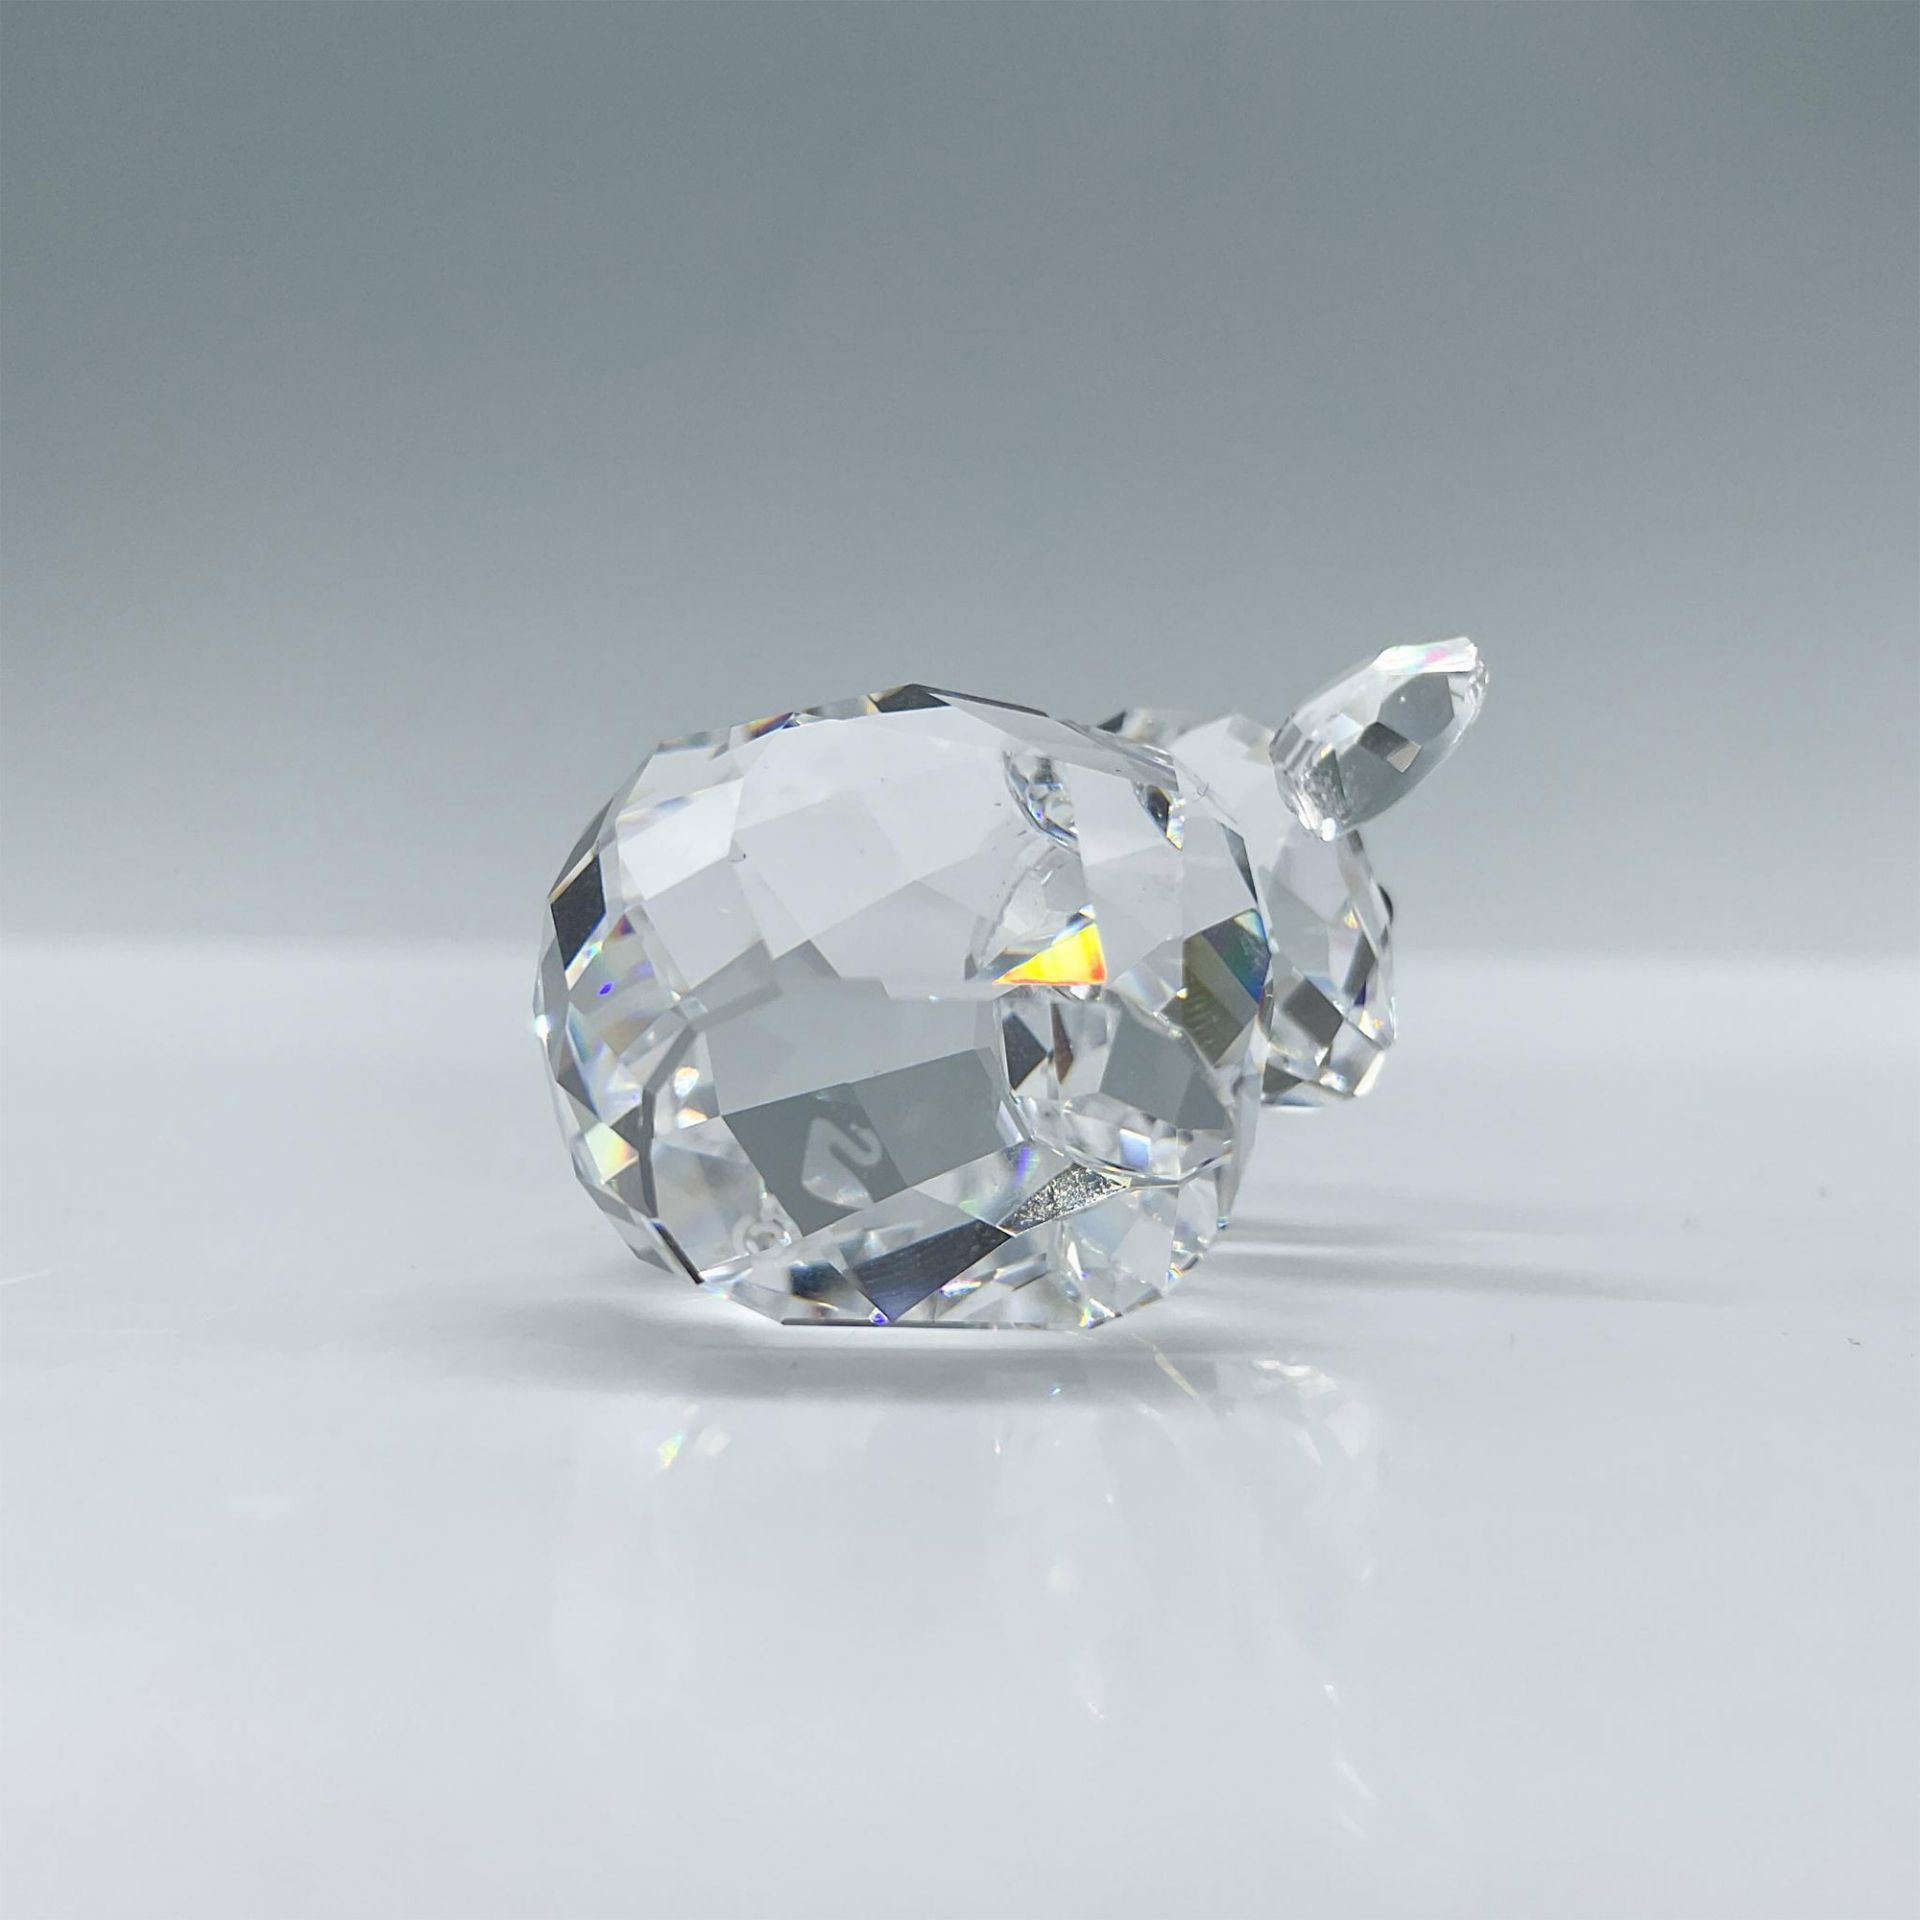 Swarovski Crystal Figurine, Y2B Sheep - Image 3 of 4